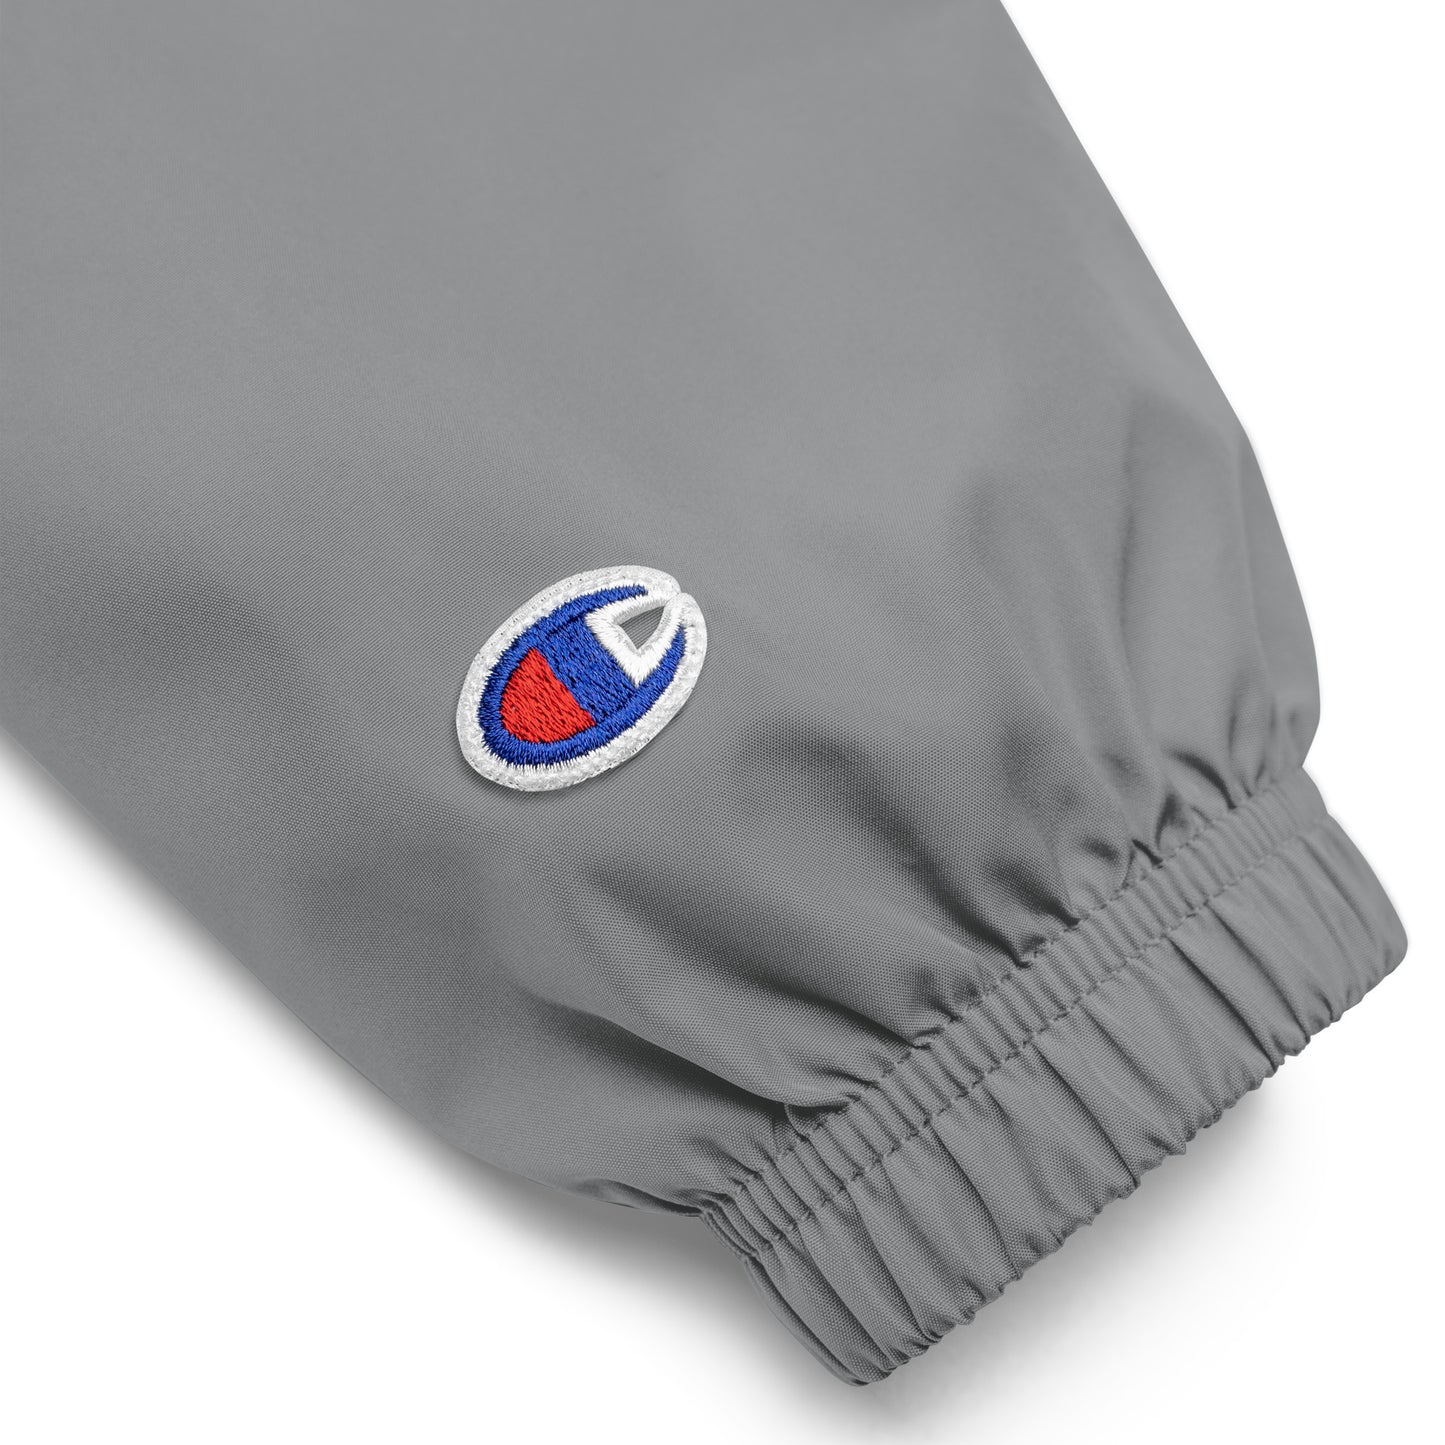 New York Apple Logo Embroidered Grey Champion Packable Windbreaker Jacket Scattered Streetwear